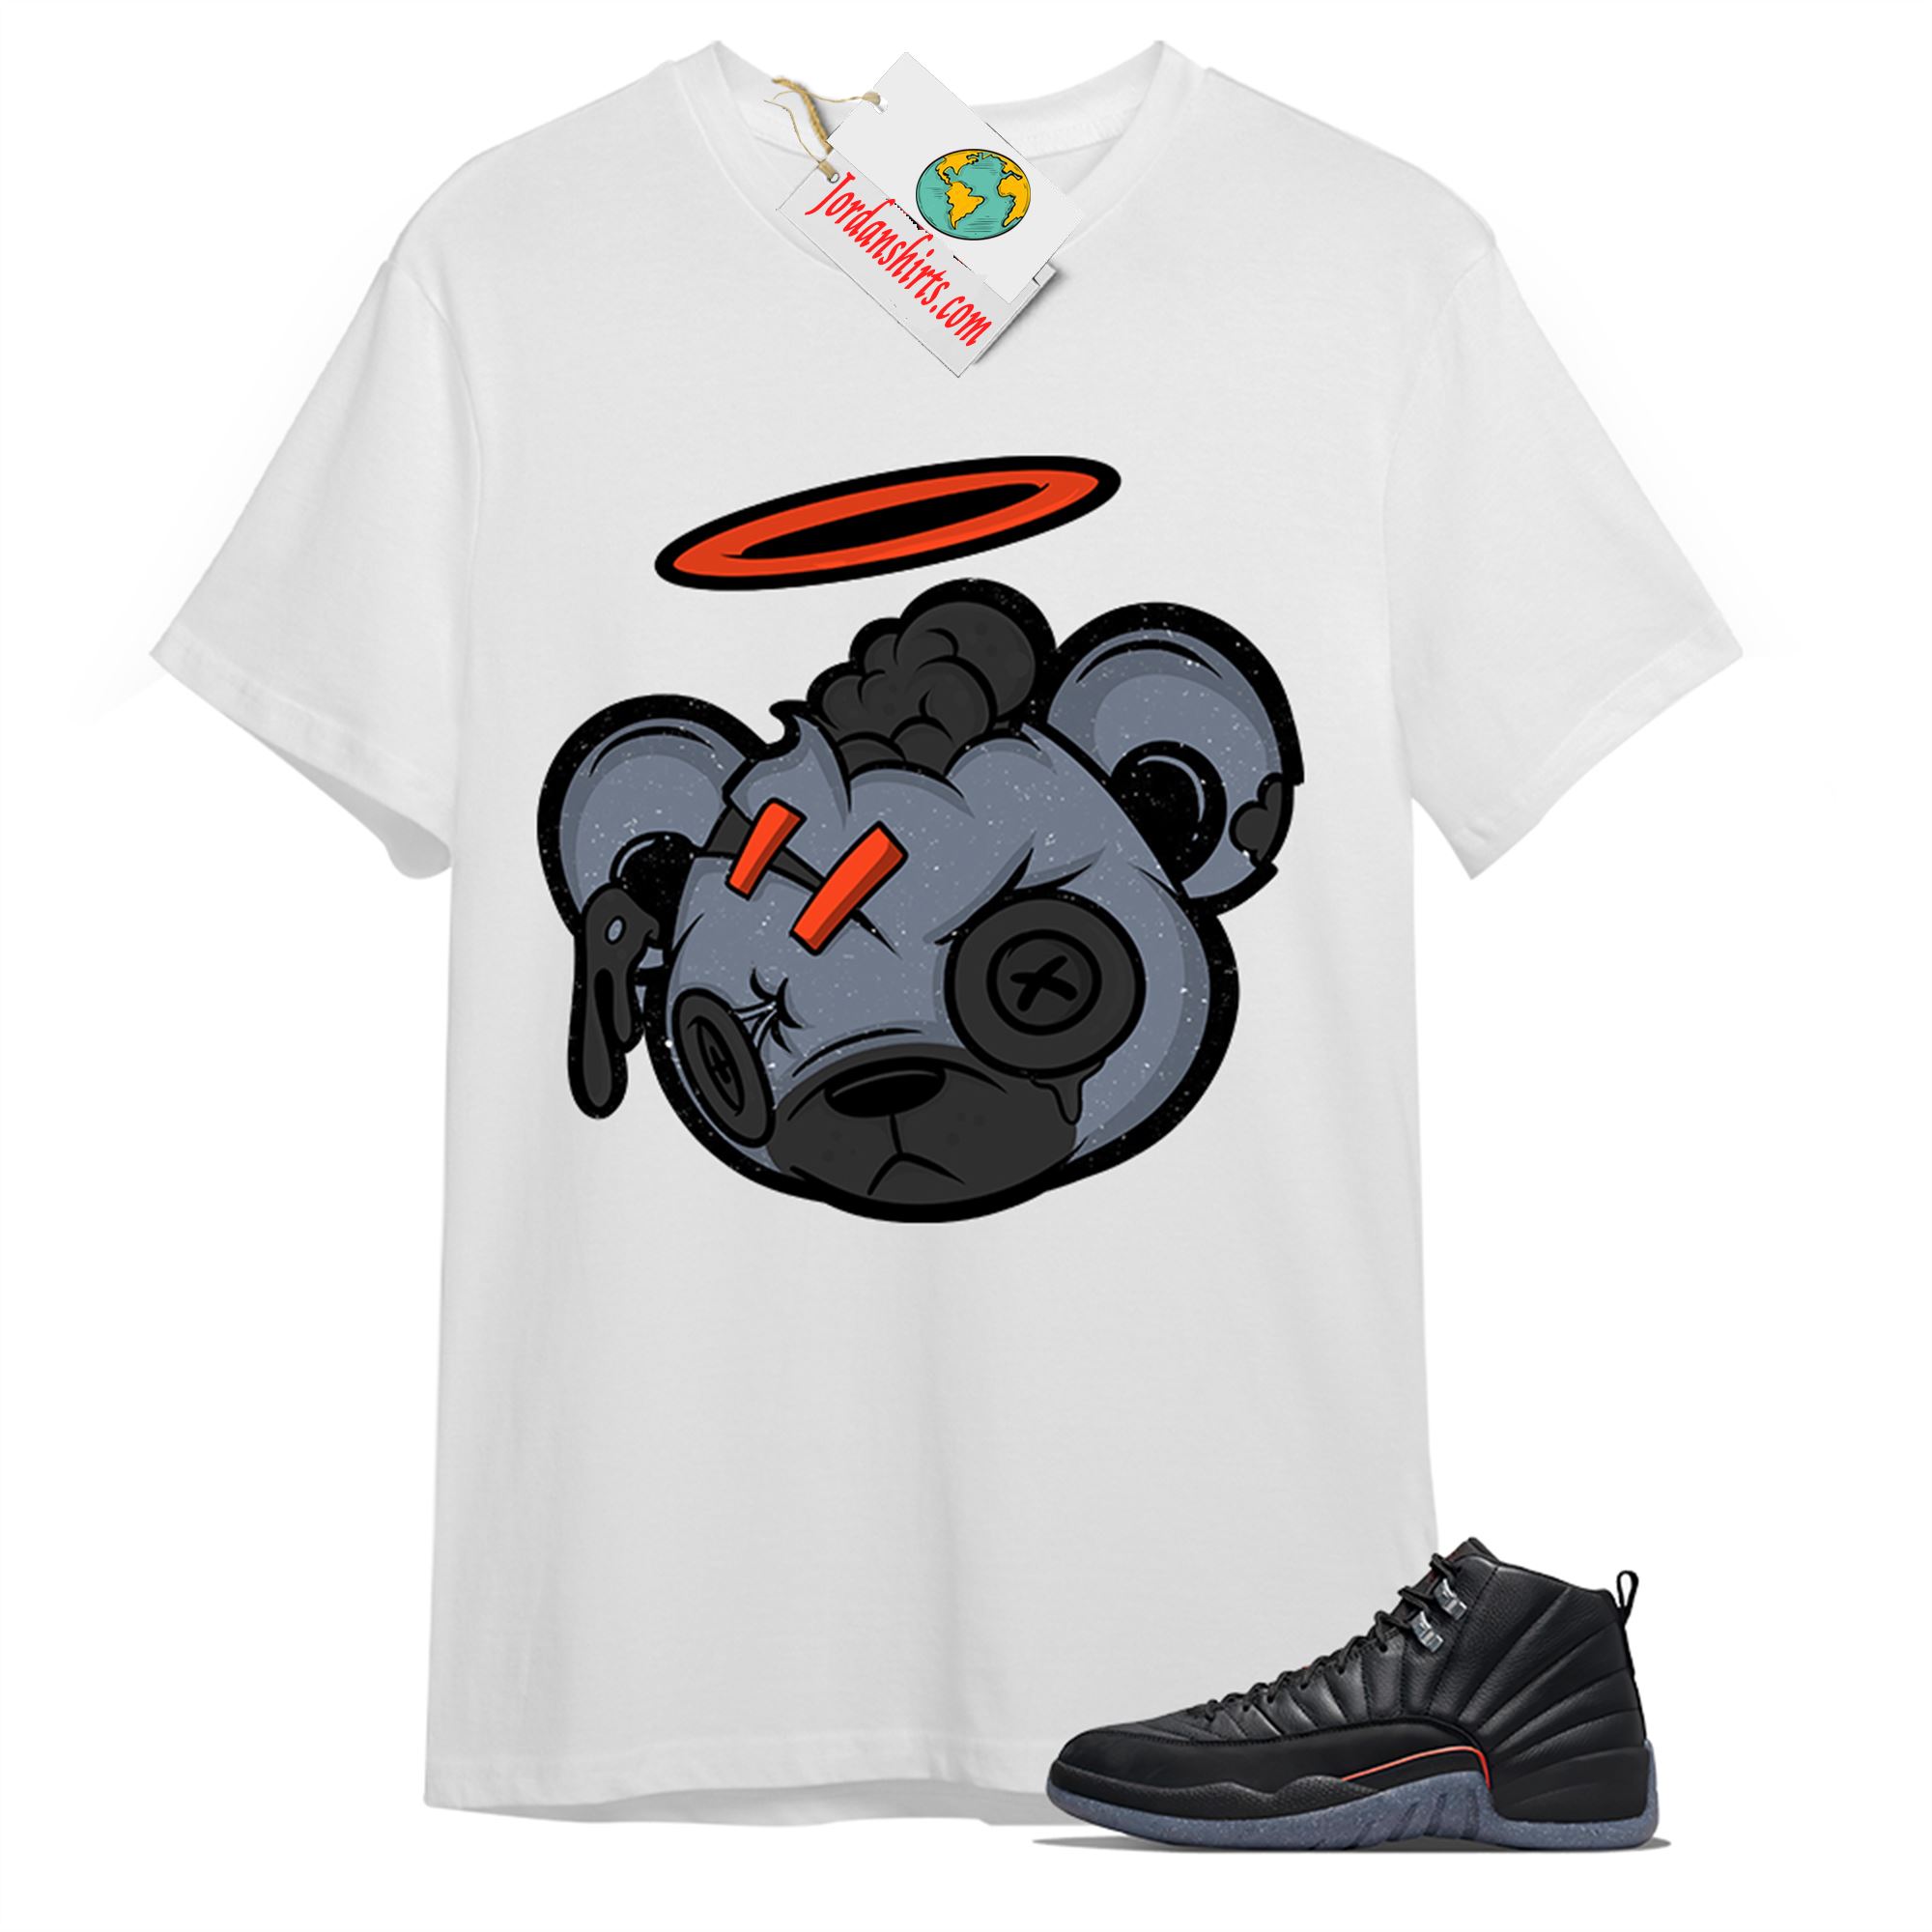 Jordan 12 Shirt, Halo Teddy White T-shirt Air Jordan 12 Utility Grind 12s Plus Size Up To 5xl